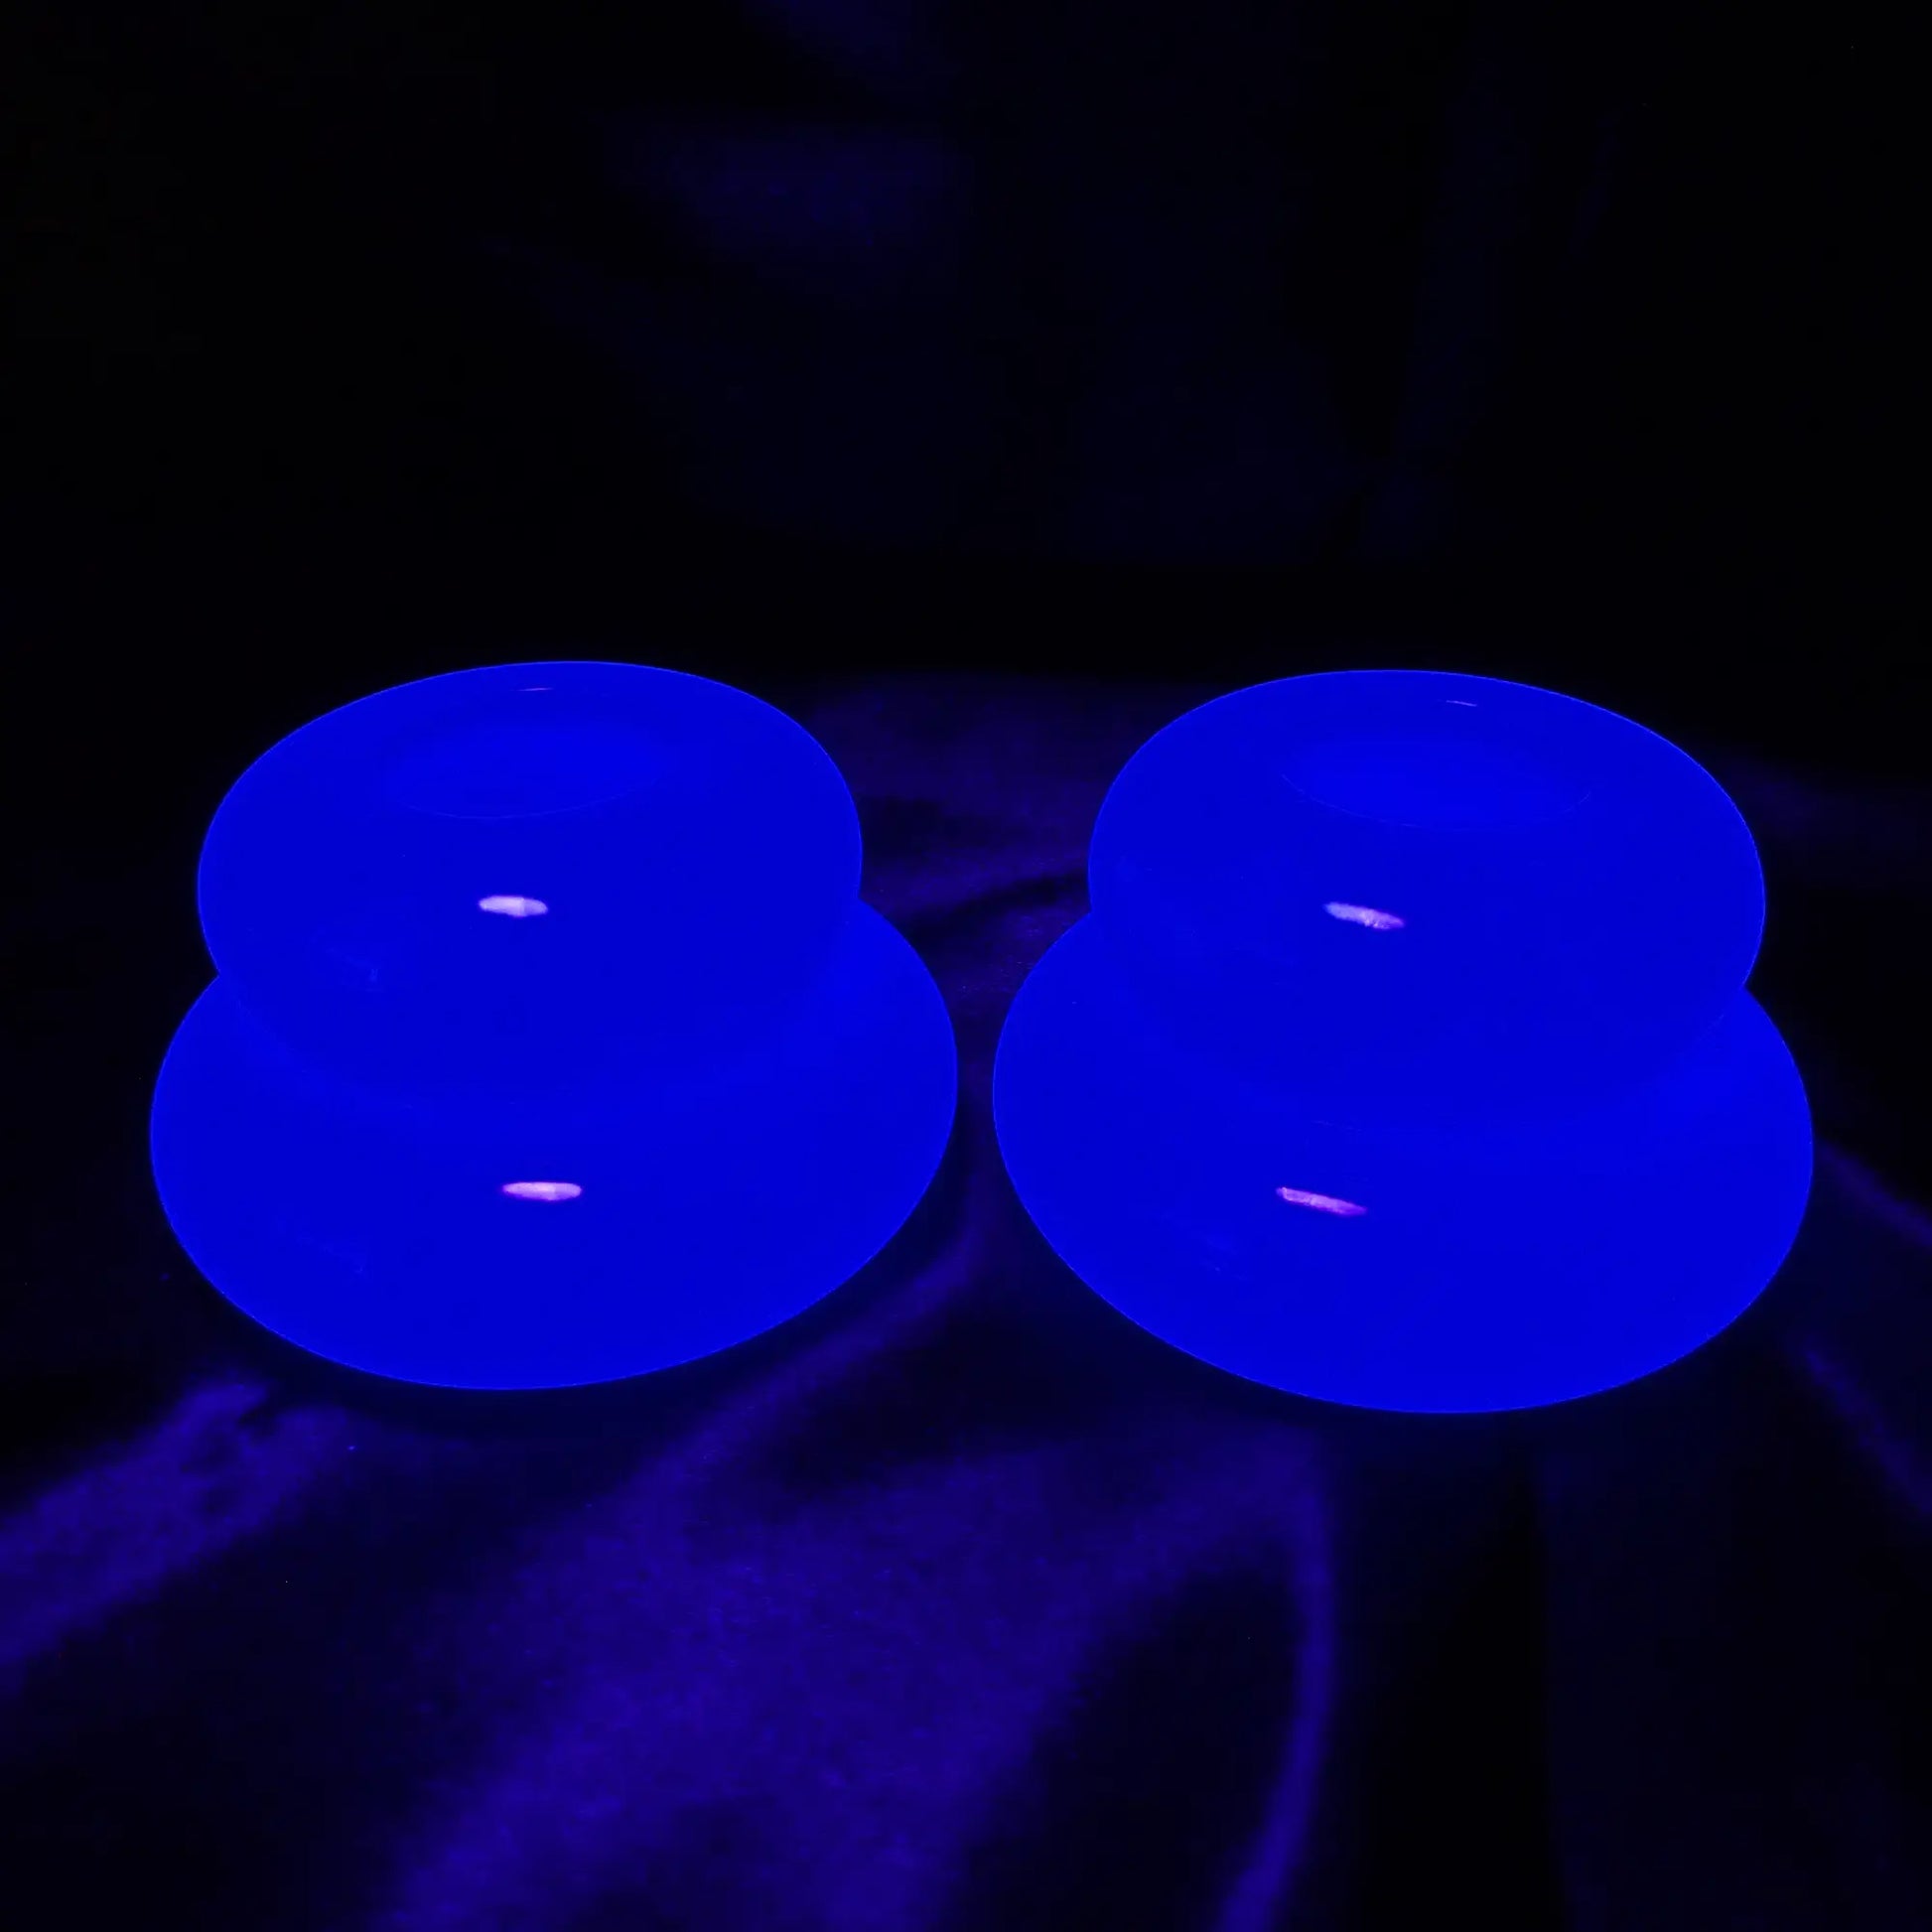 Photo showing the handmade neon blue resin candlestick holders fluorescing under a UV light.